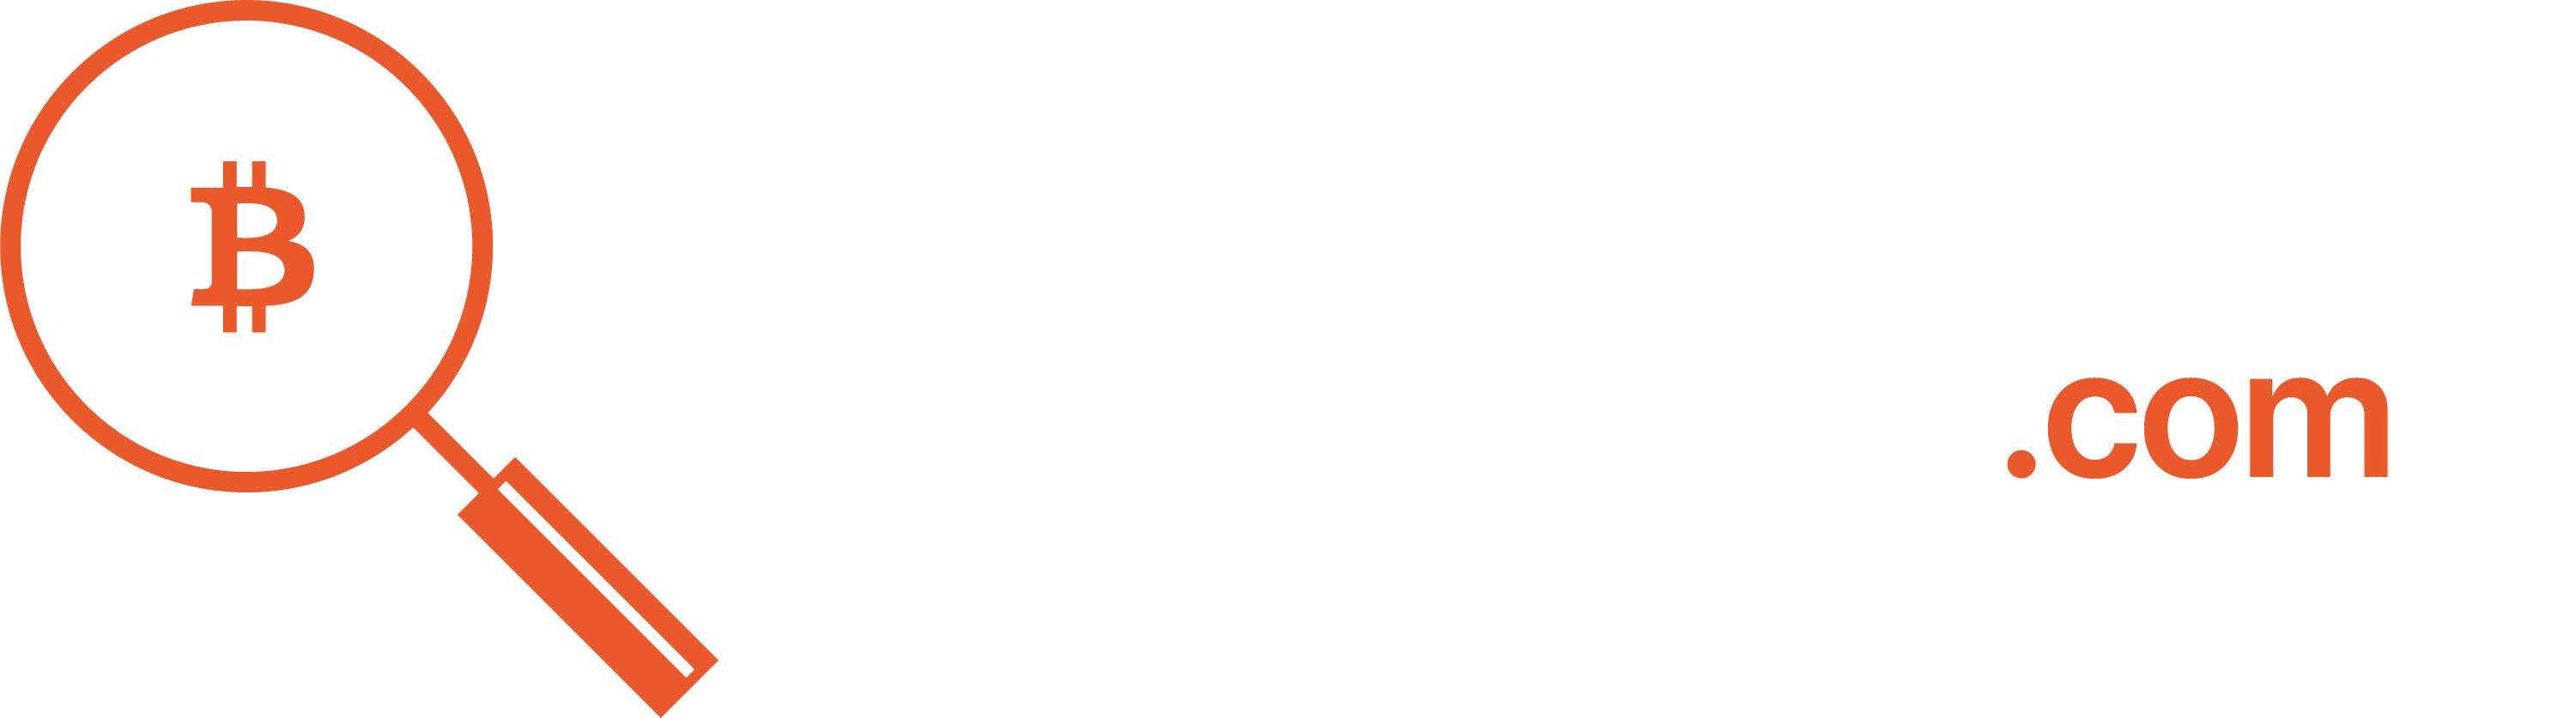 cyber tracking logo